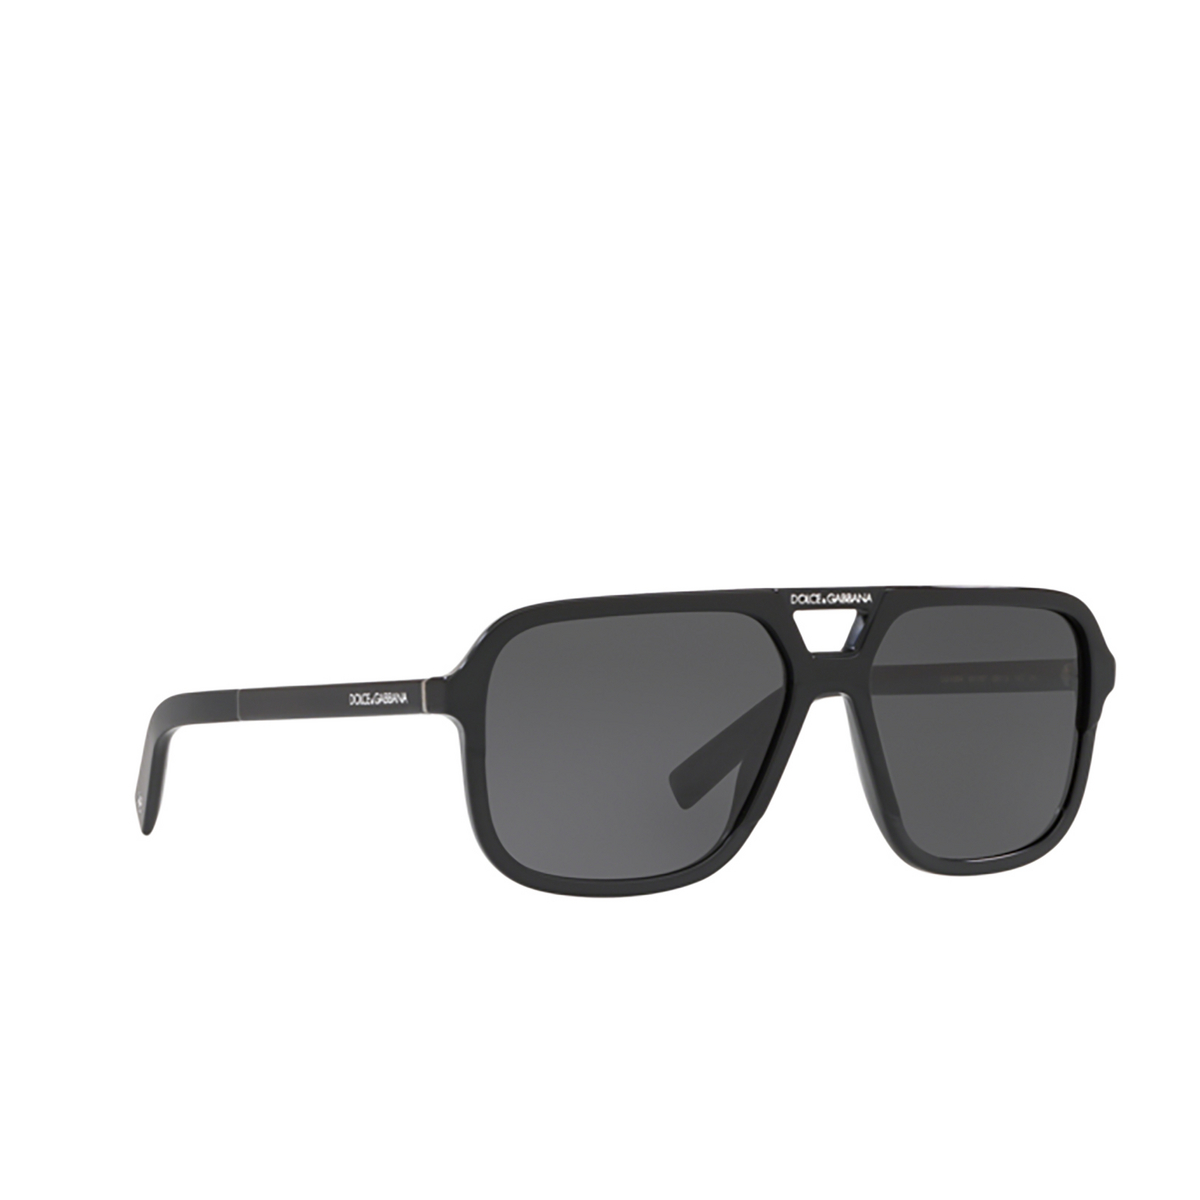 Dolce & Gabbana DG4354 Sunglasses 501/87 Black - three-quarters view